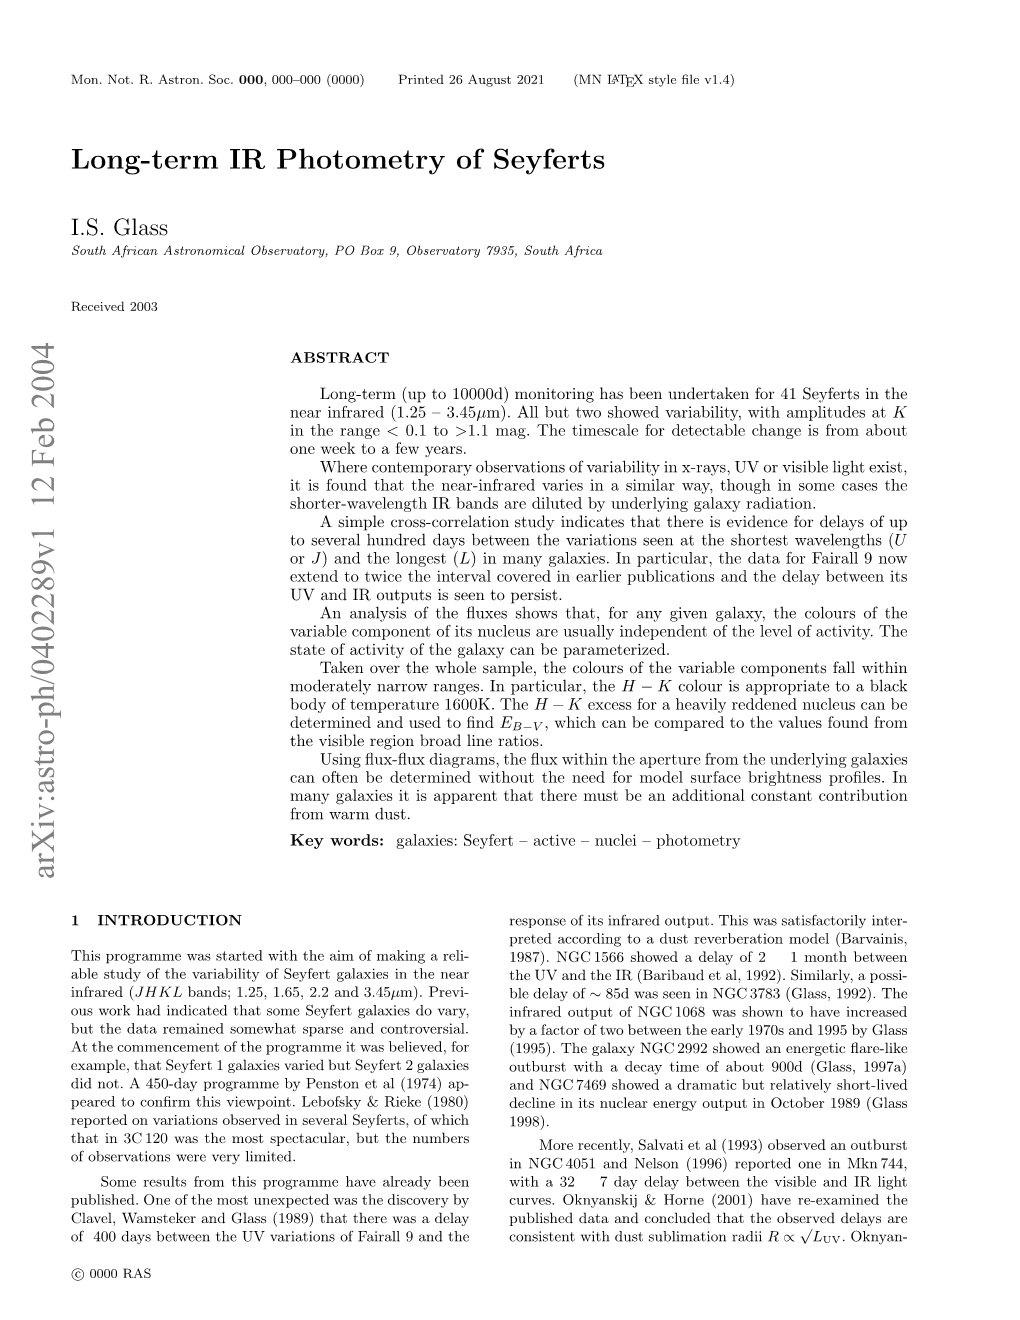 Long-Term IR Photometry of Seyferts 3